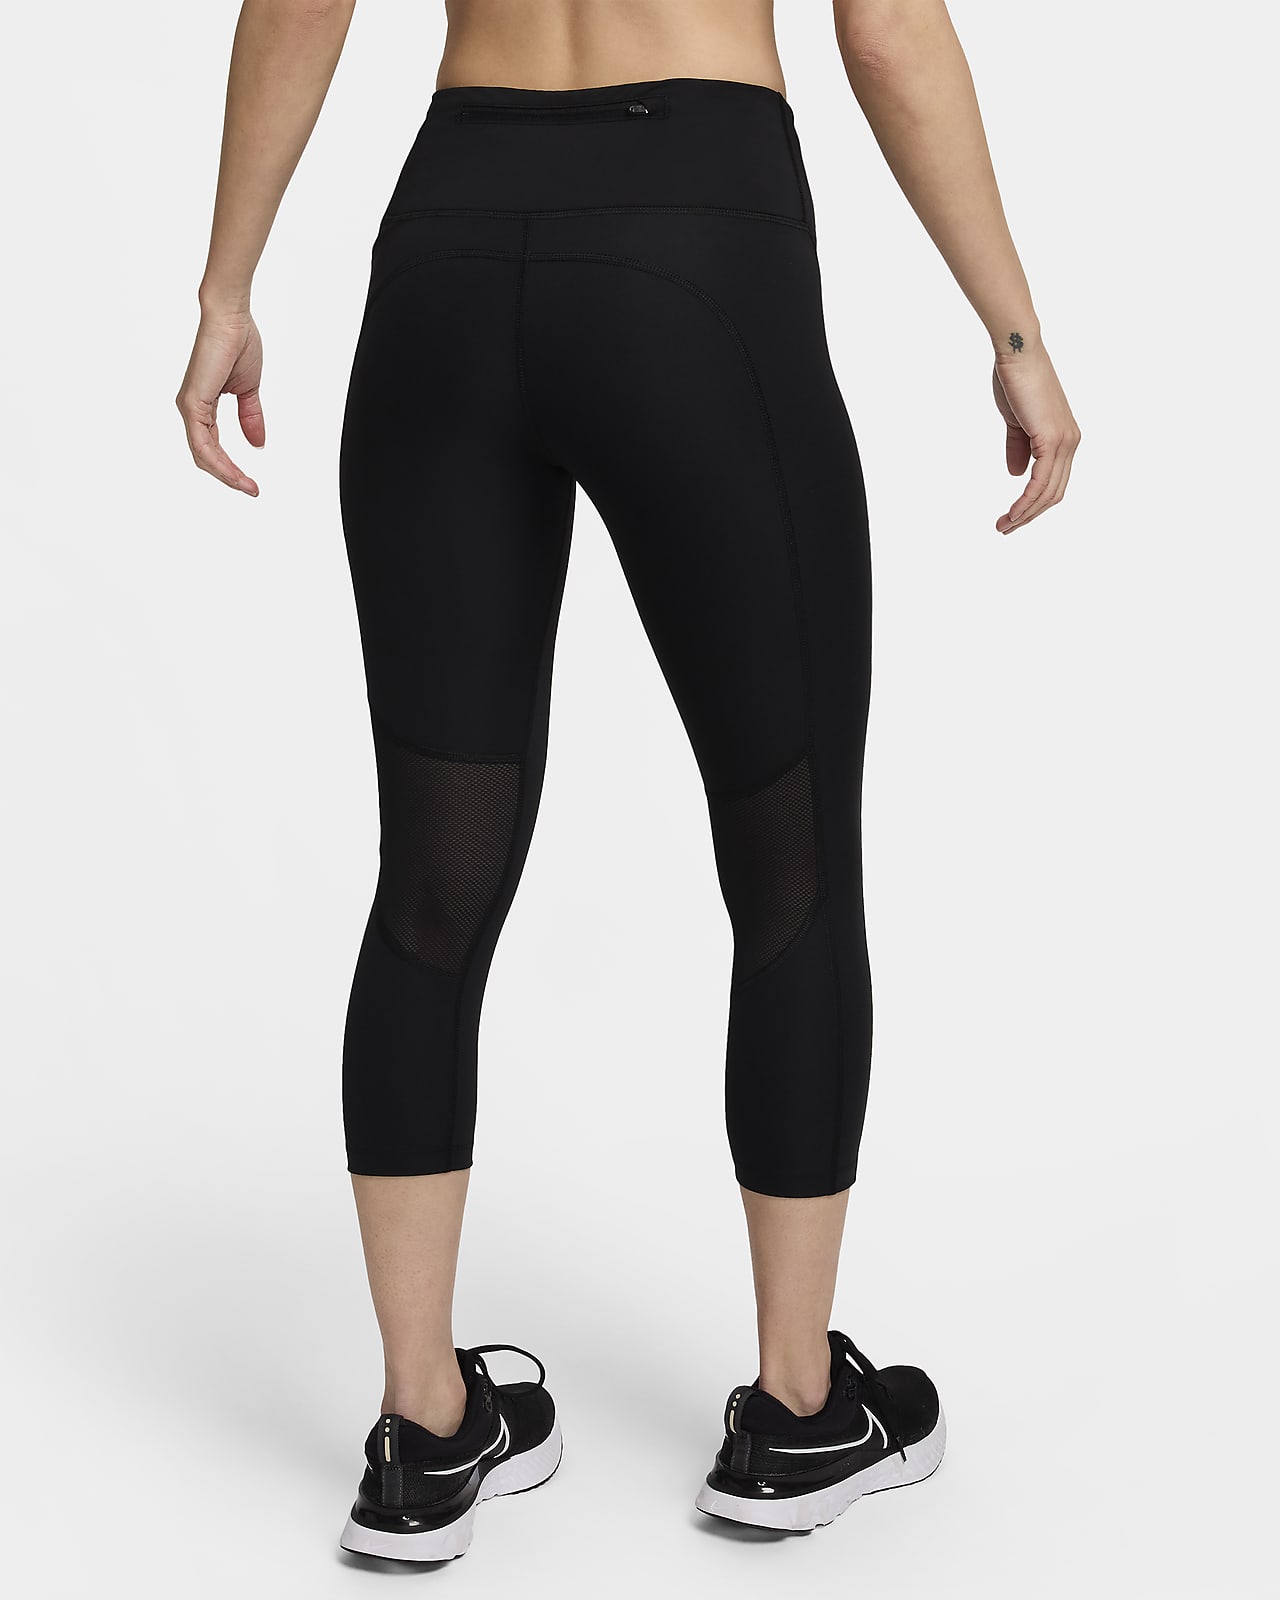 Nike Fast Crop Runway Women's Crop Running Tights CJ2162-654 Size Medium